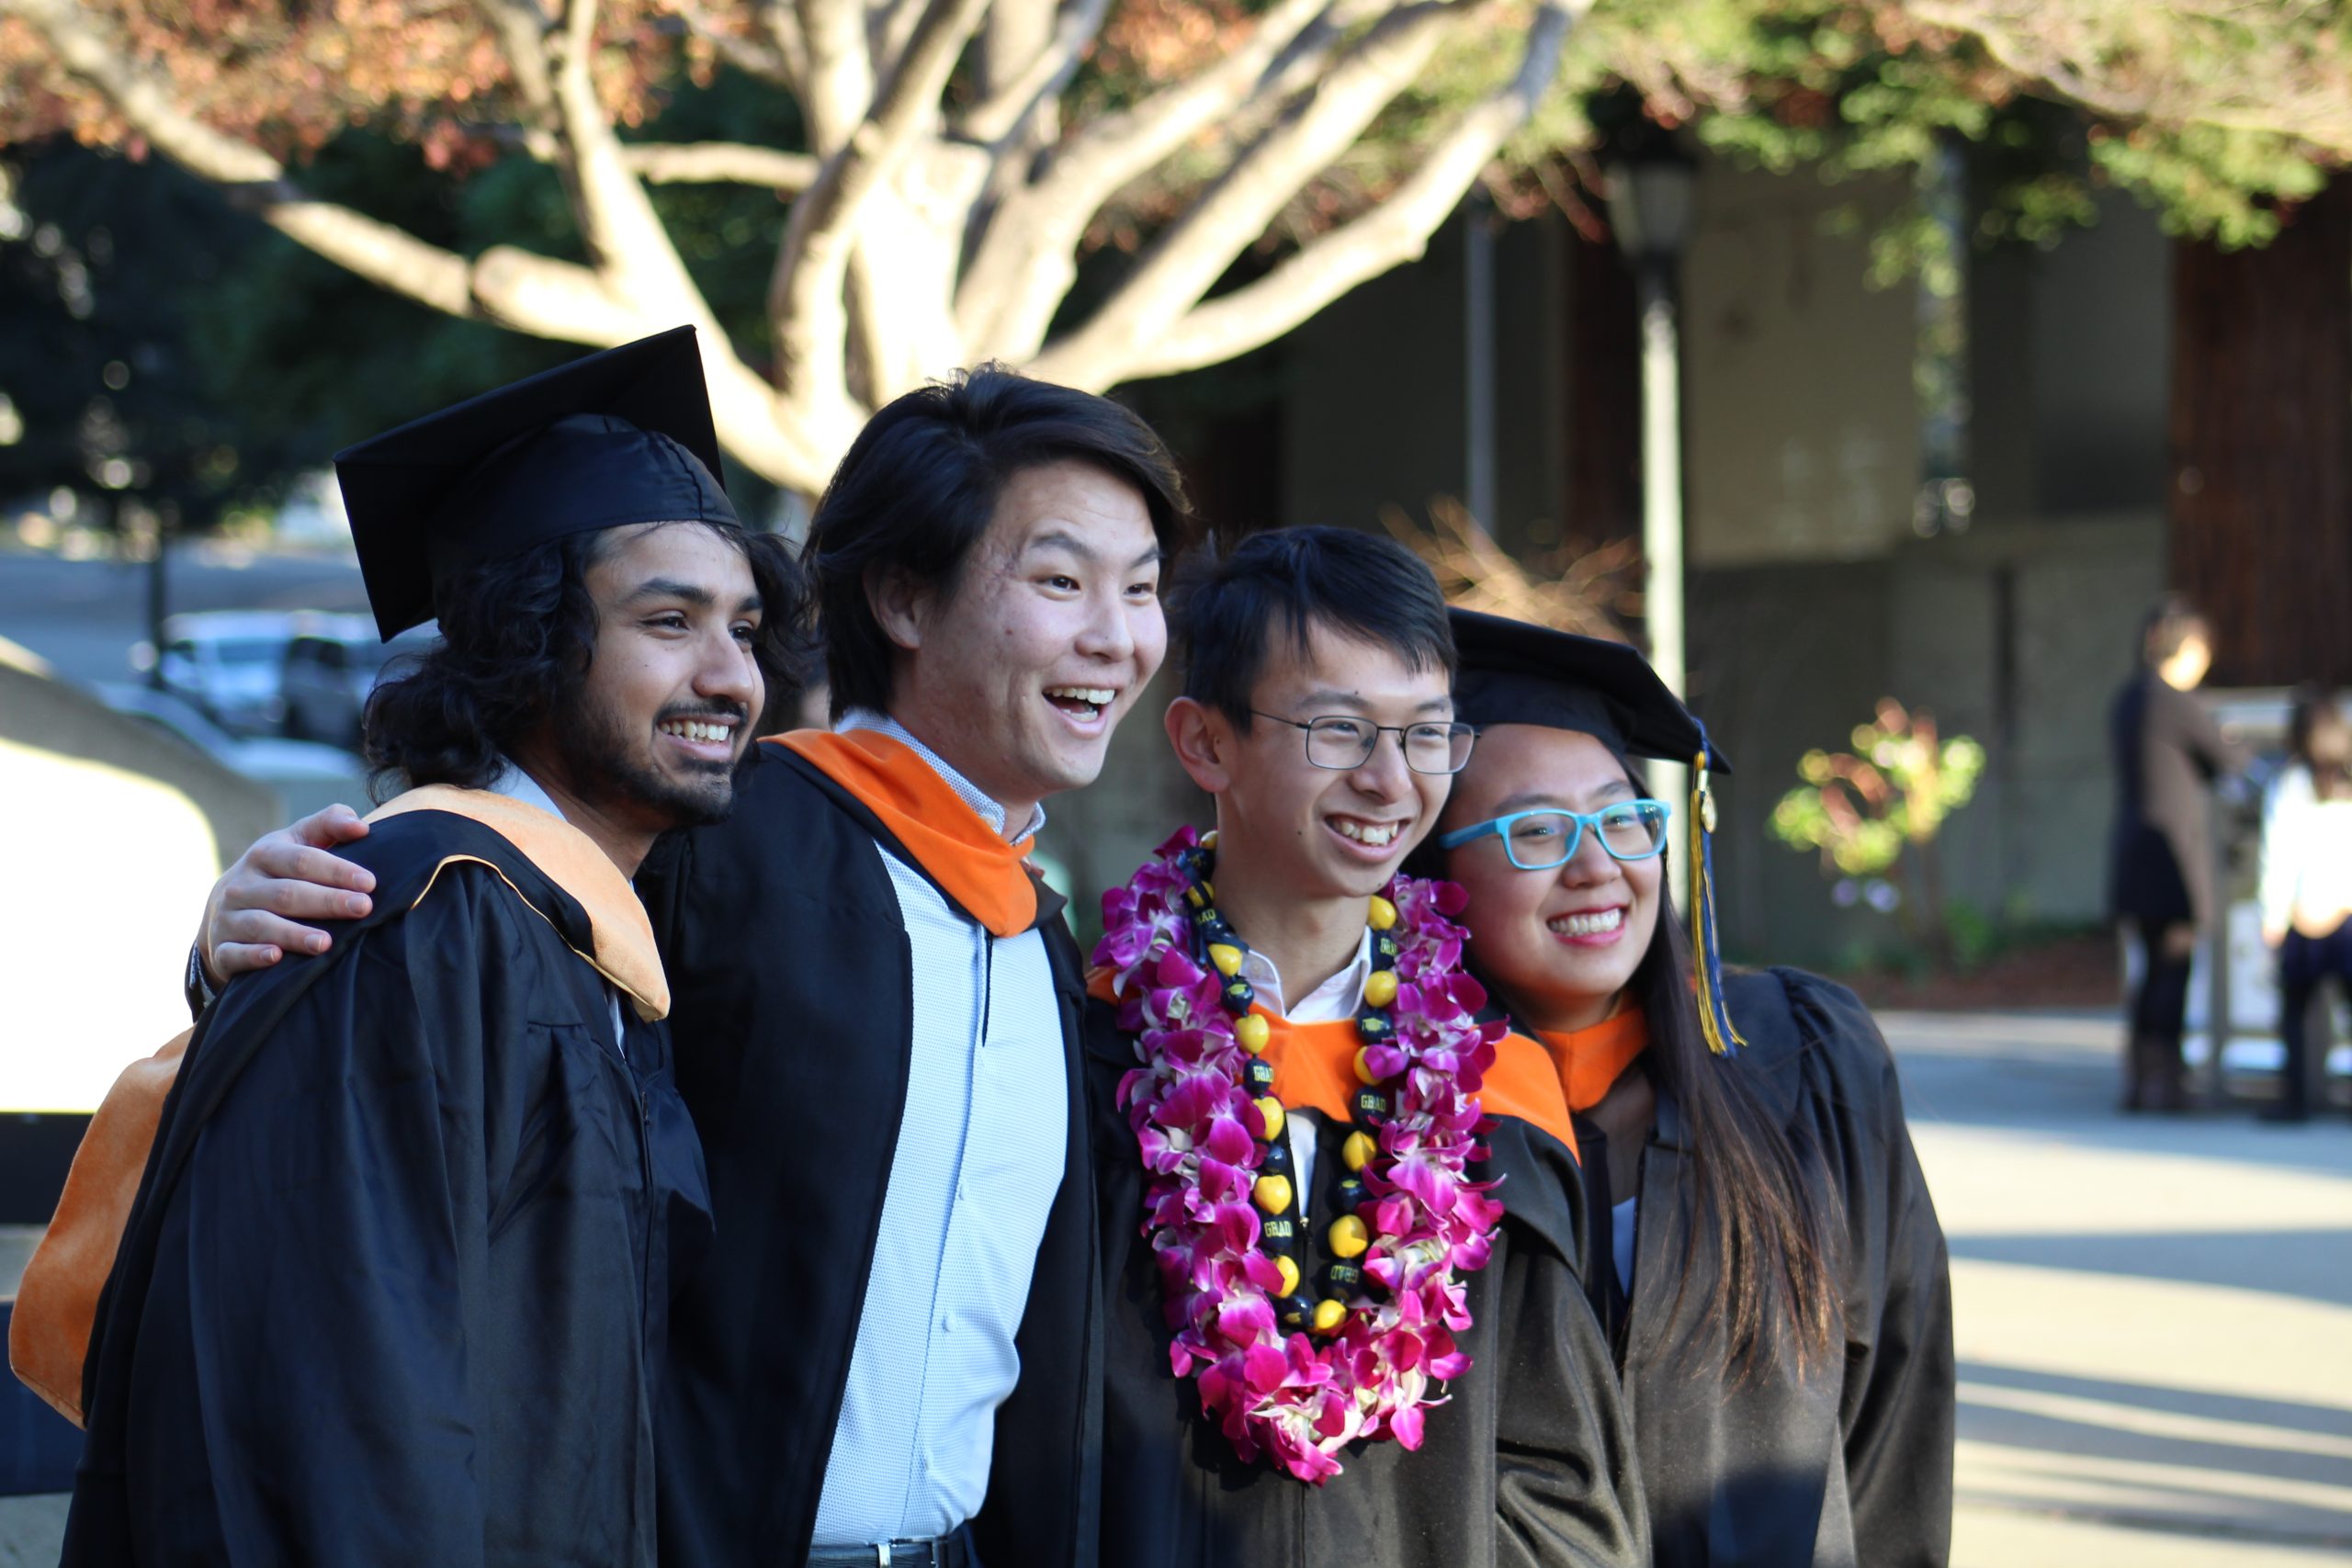 From left: Malika Sugathapala, Daniel Huang, Curtis Wong, and Eleanor Chin (Photo by Sam Goldman)